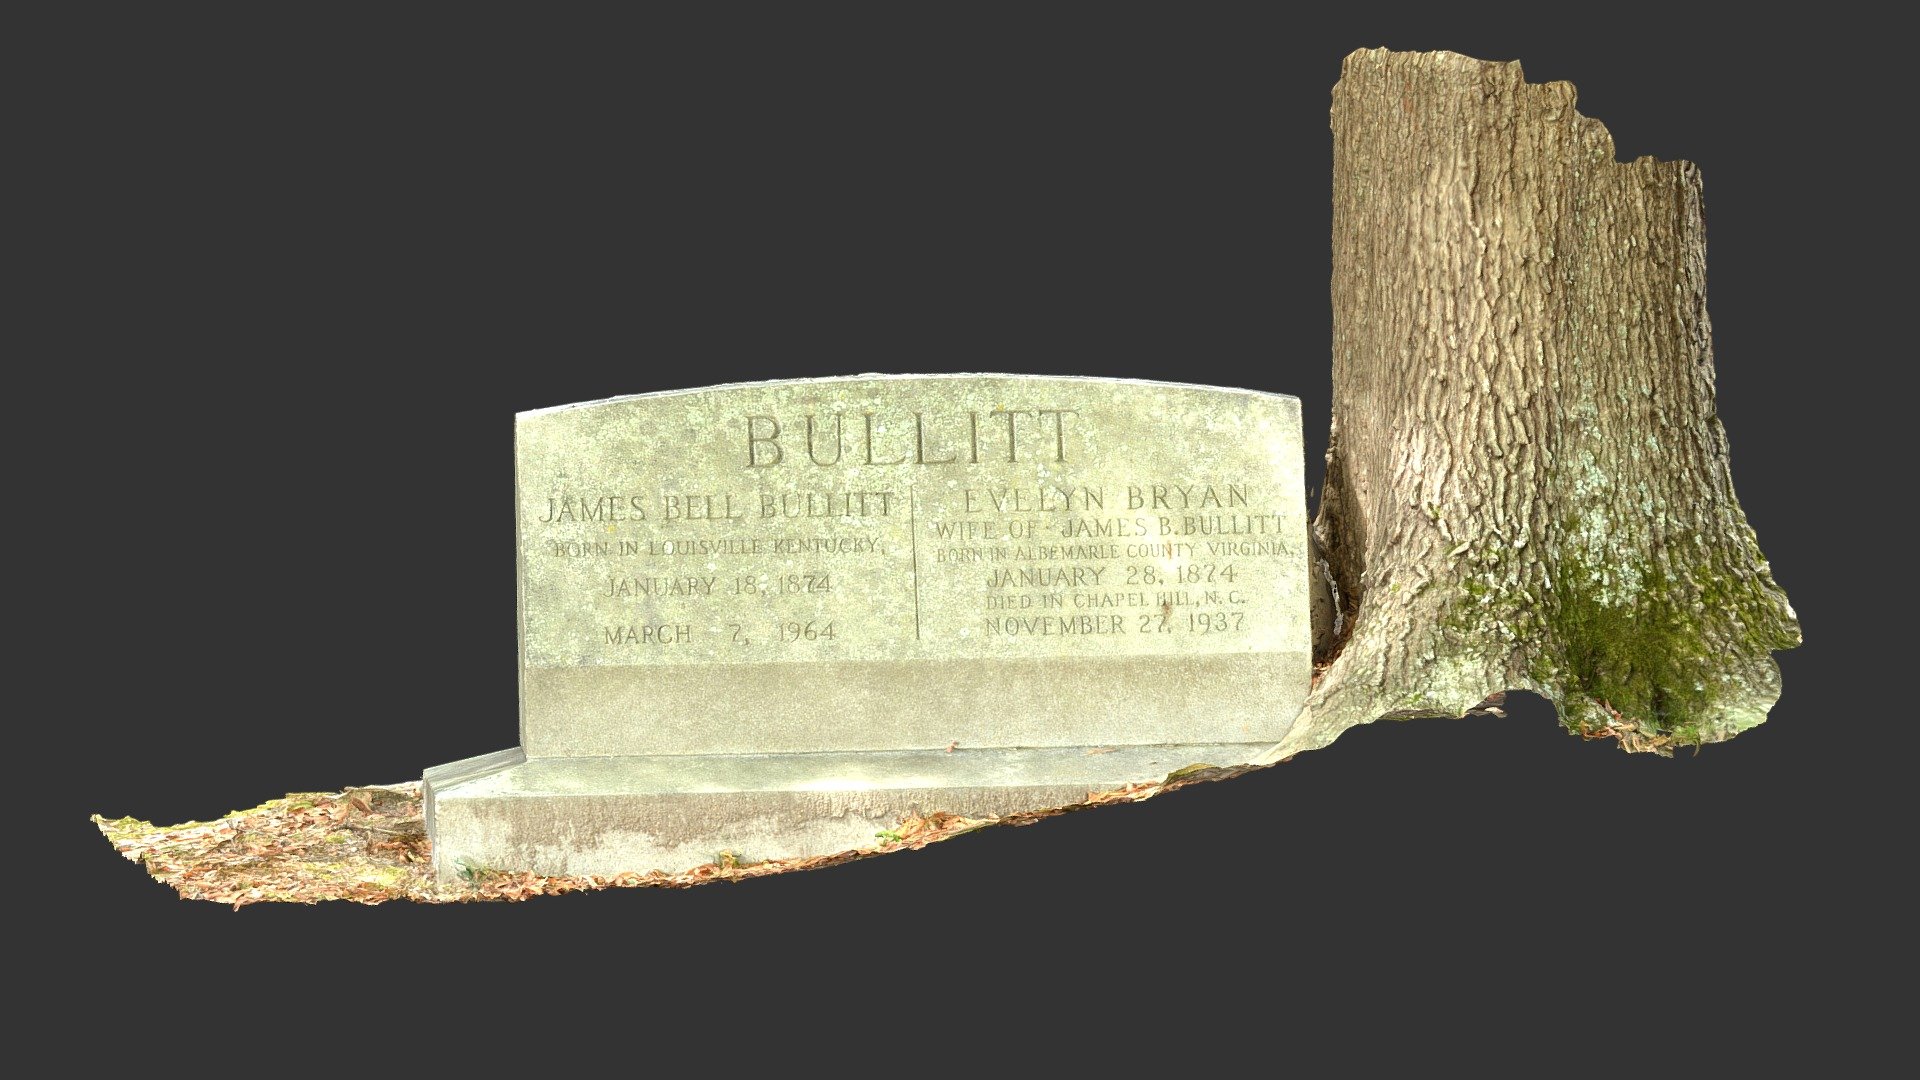 James Bell Bullitt's tombstone